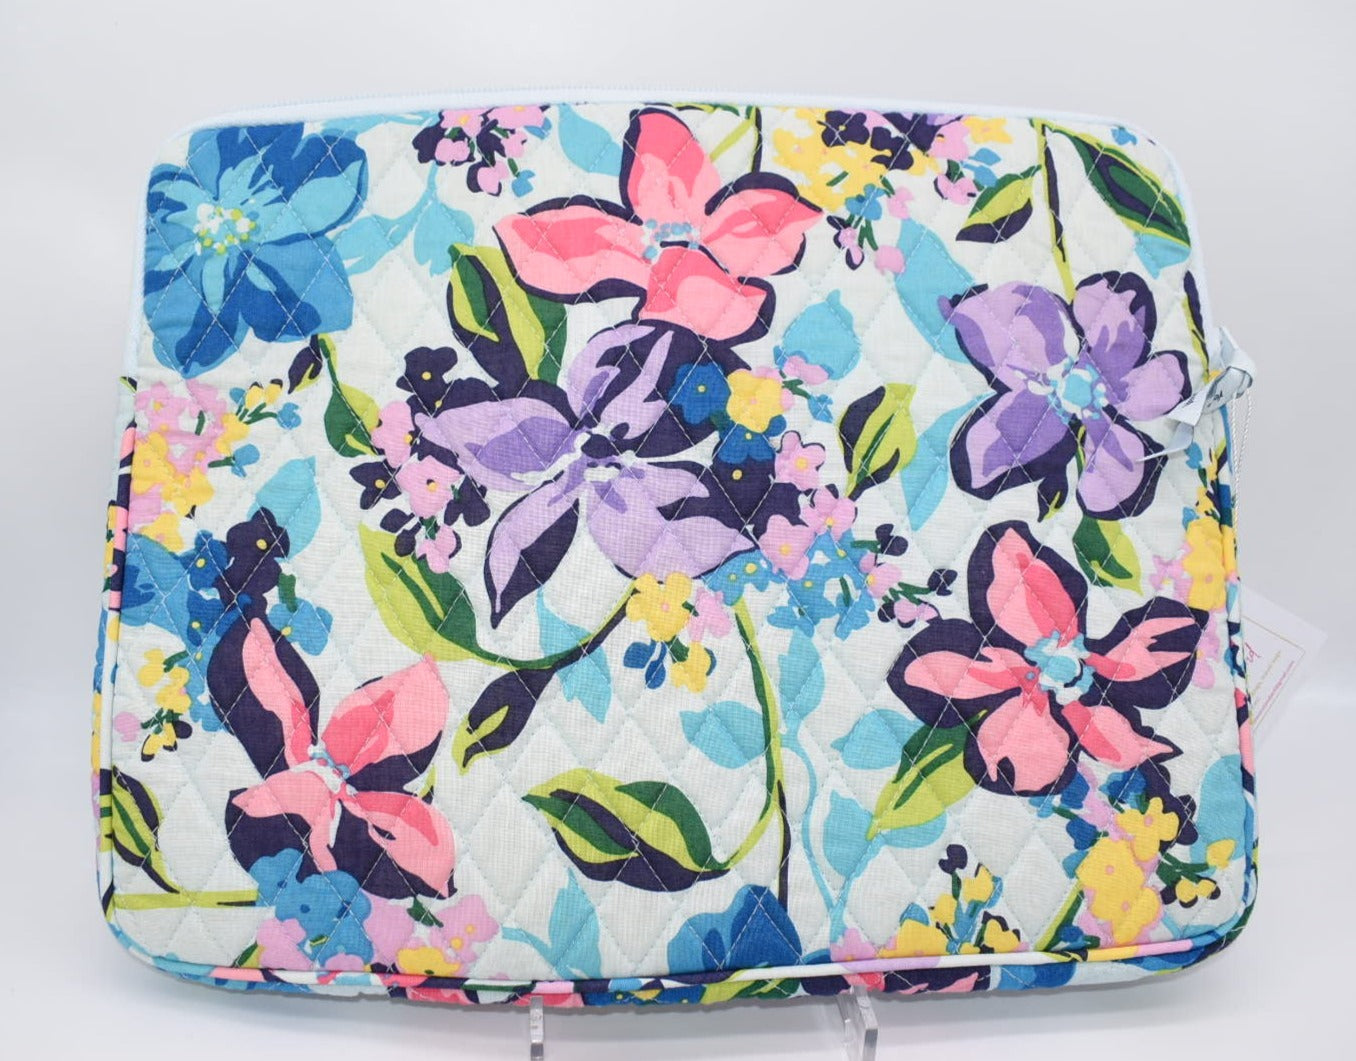 Vera Bradley 14" Laptop Soft Case in "Marian Floral" Pattern